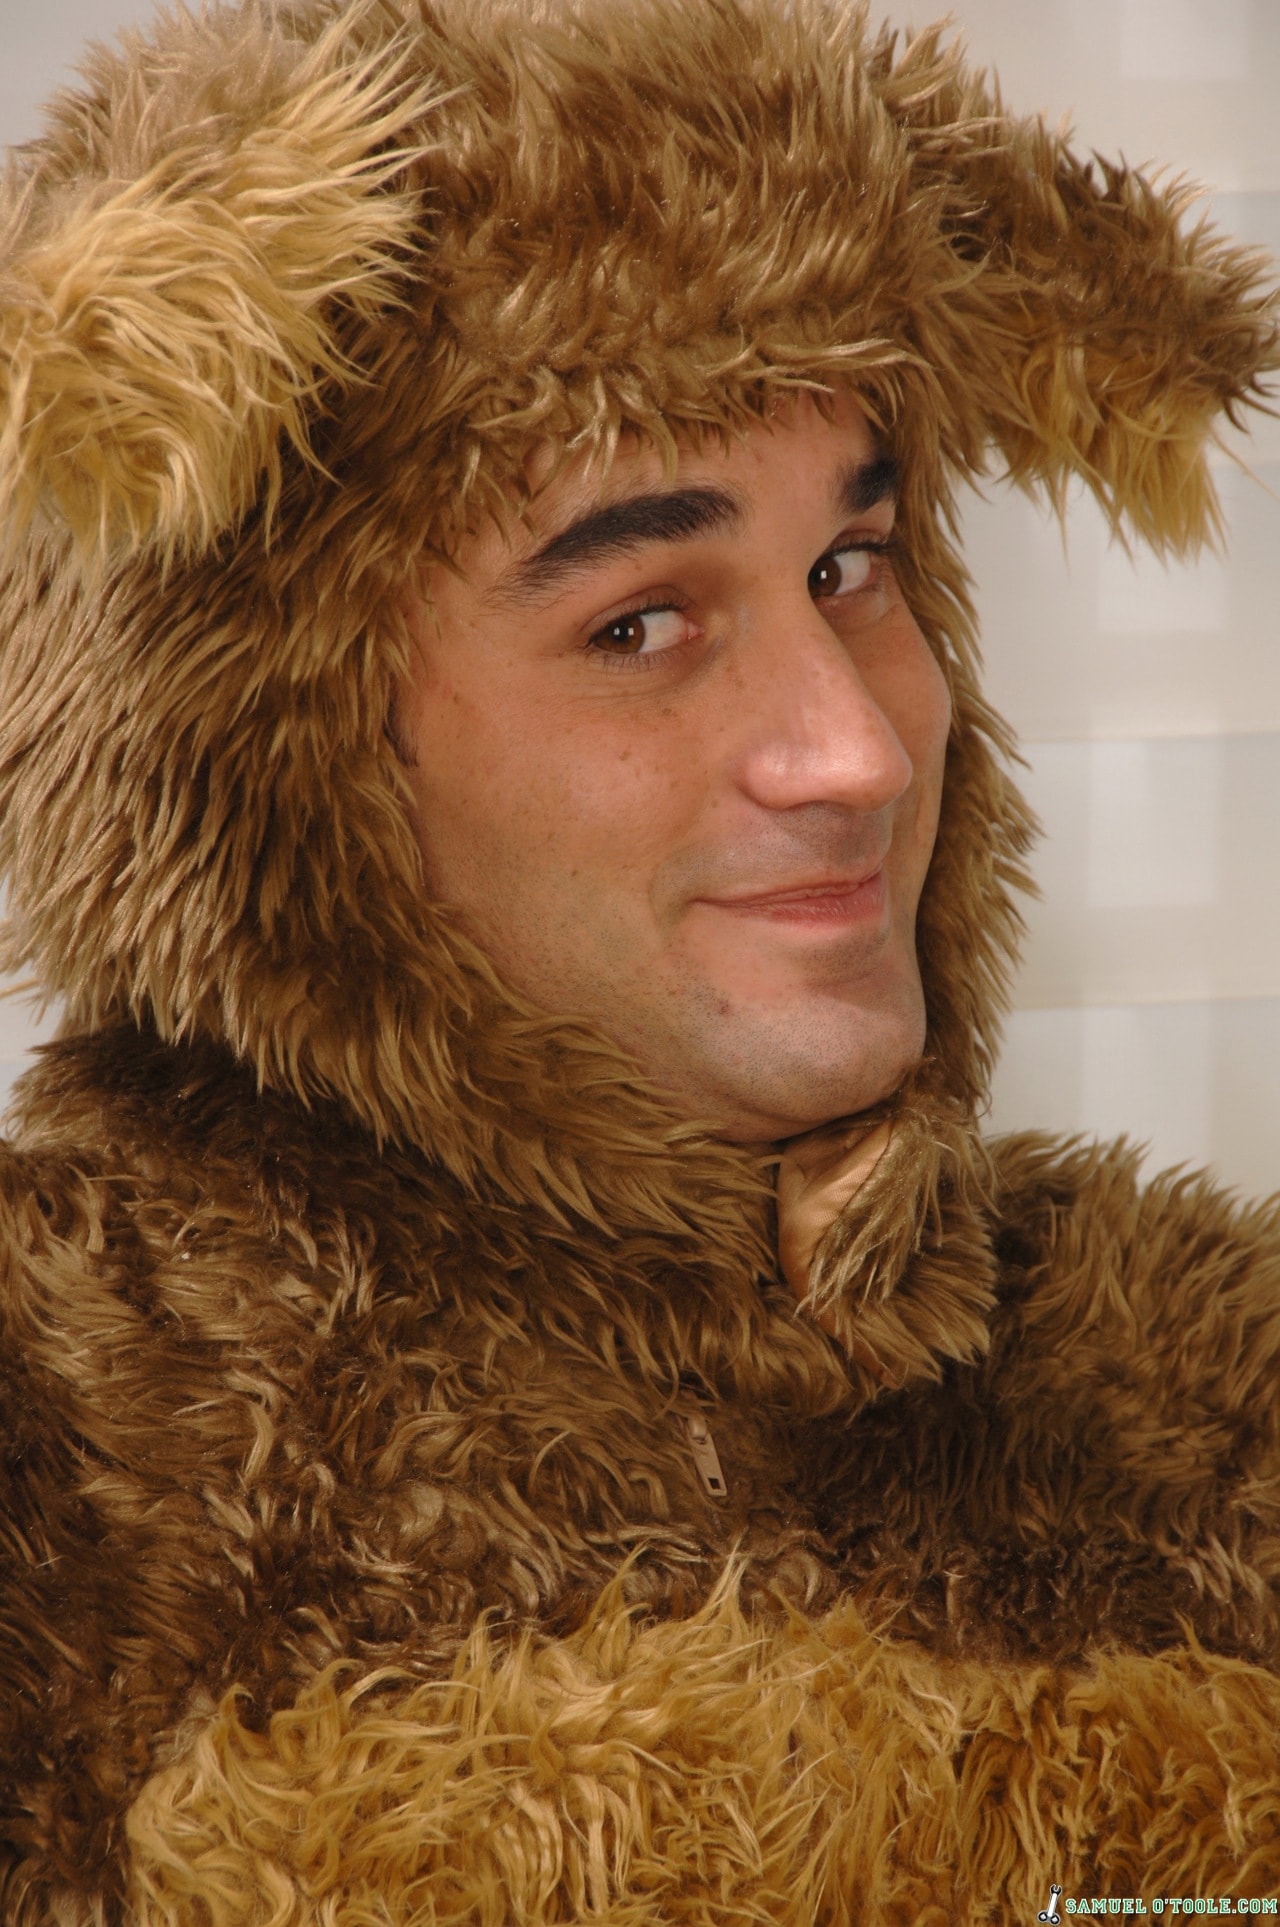 Next Door Studios 'Bearly Fur Real' starring Samuel O'Toole (Photo 16)